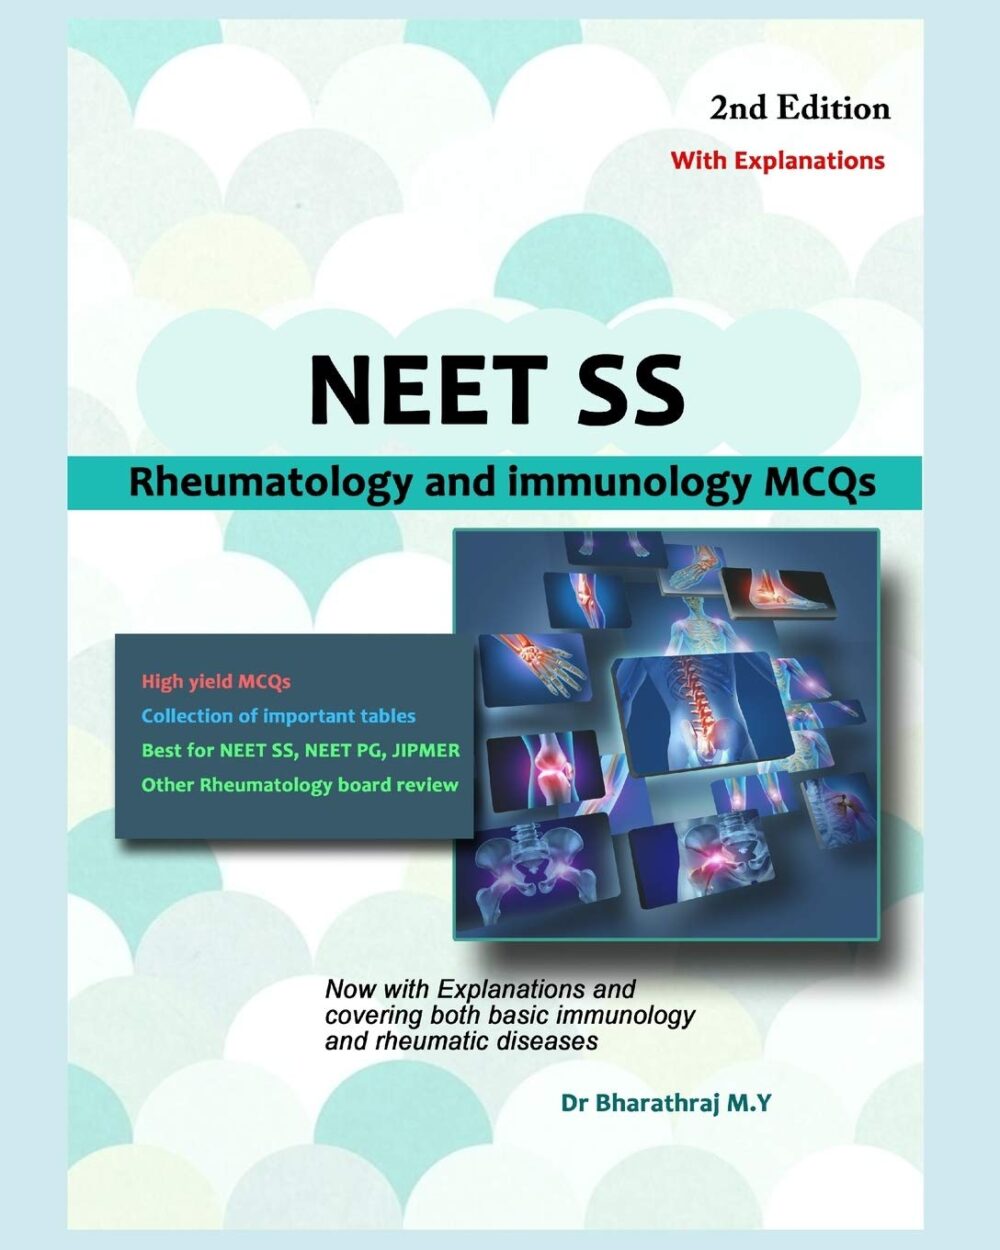 NEET SS - طب الروماتيزم والمناعة MCQs